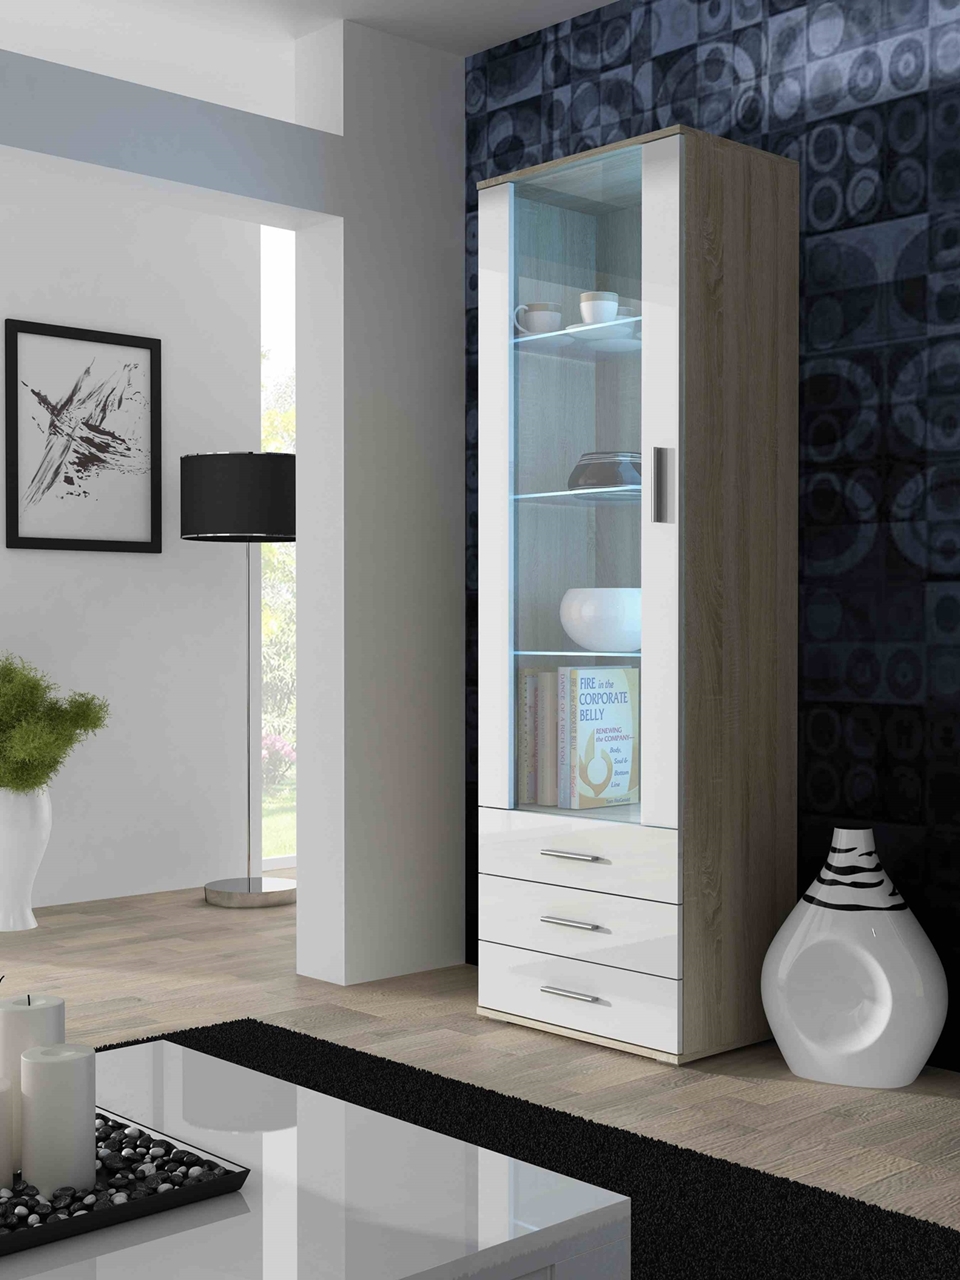 Display cabinet SOHO SH1E sonoma oak / white gloss